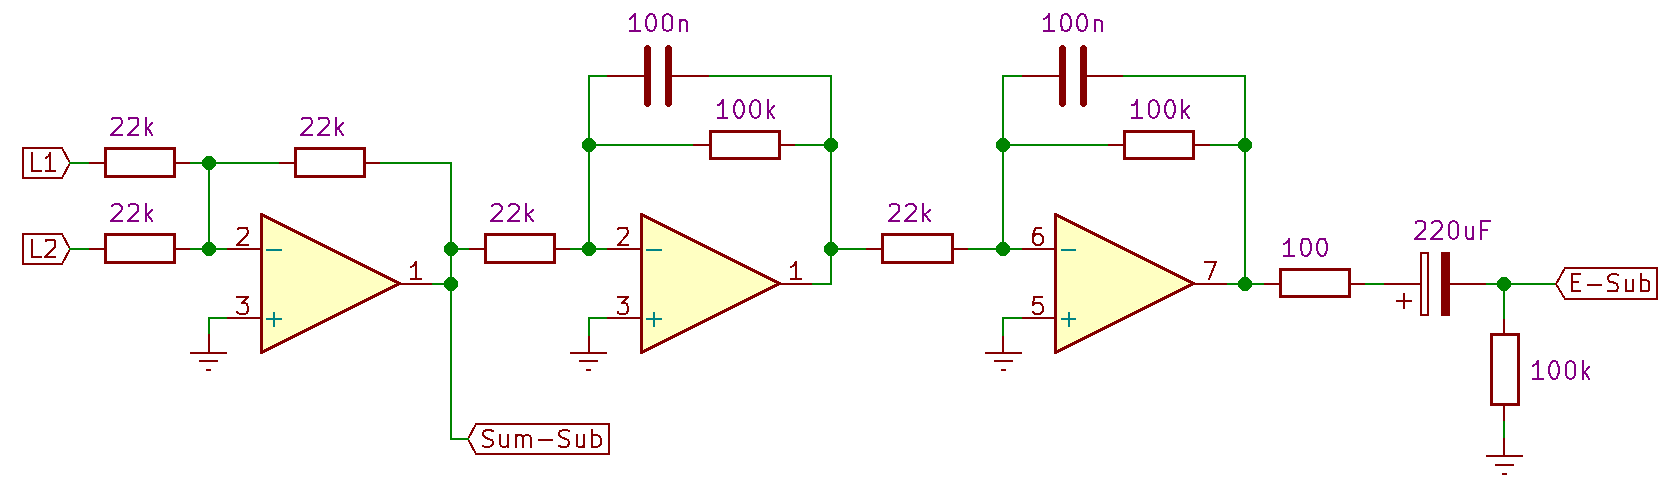 Figure 3. Sub-woofer output